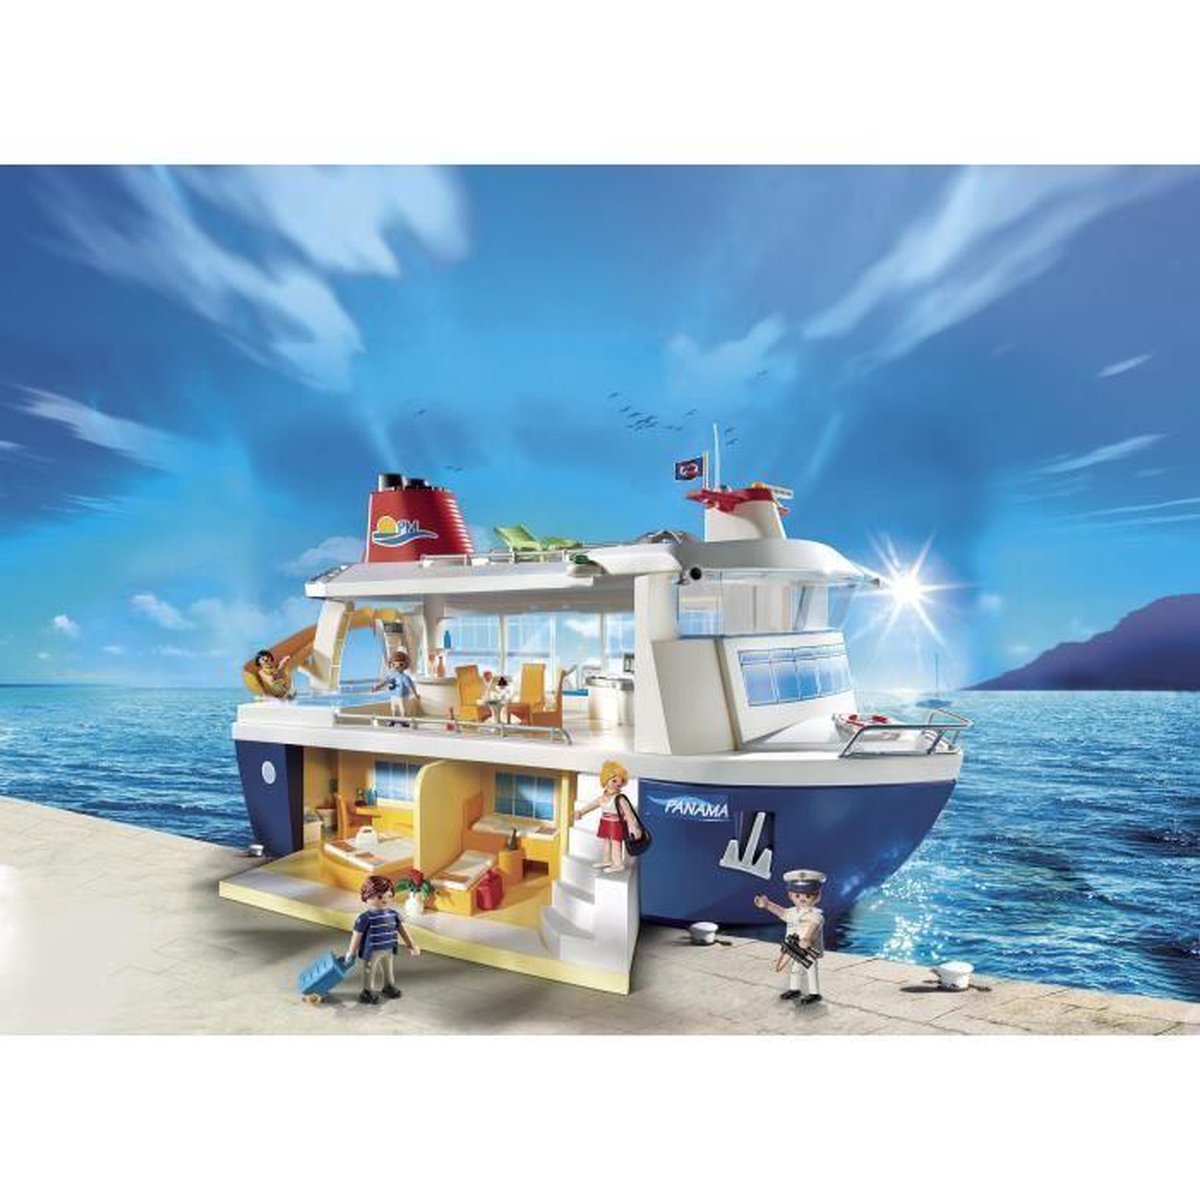 PLAYMOBIL Family Fun Cruiseschip - 6978 | bol.com